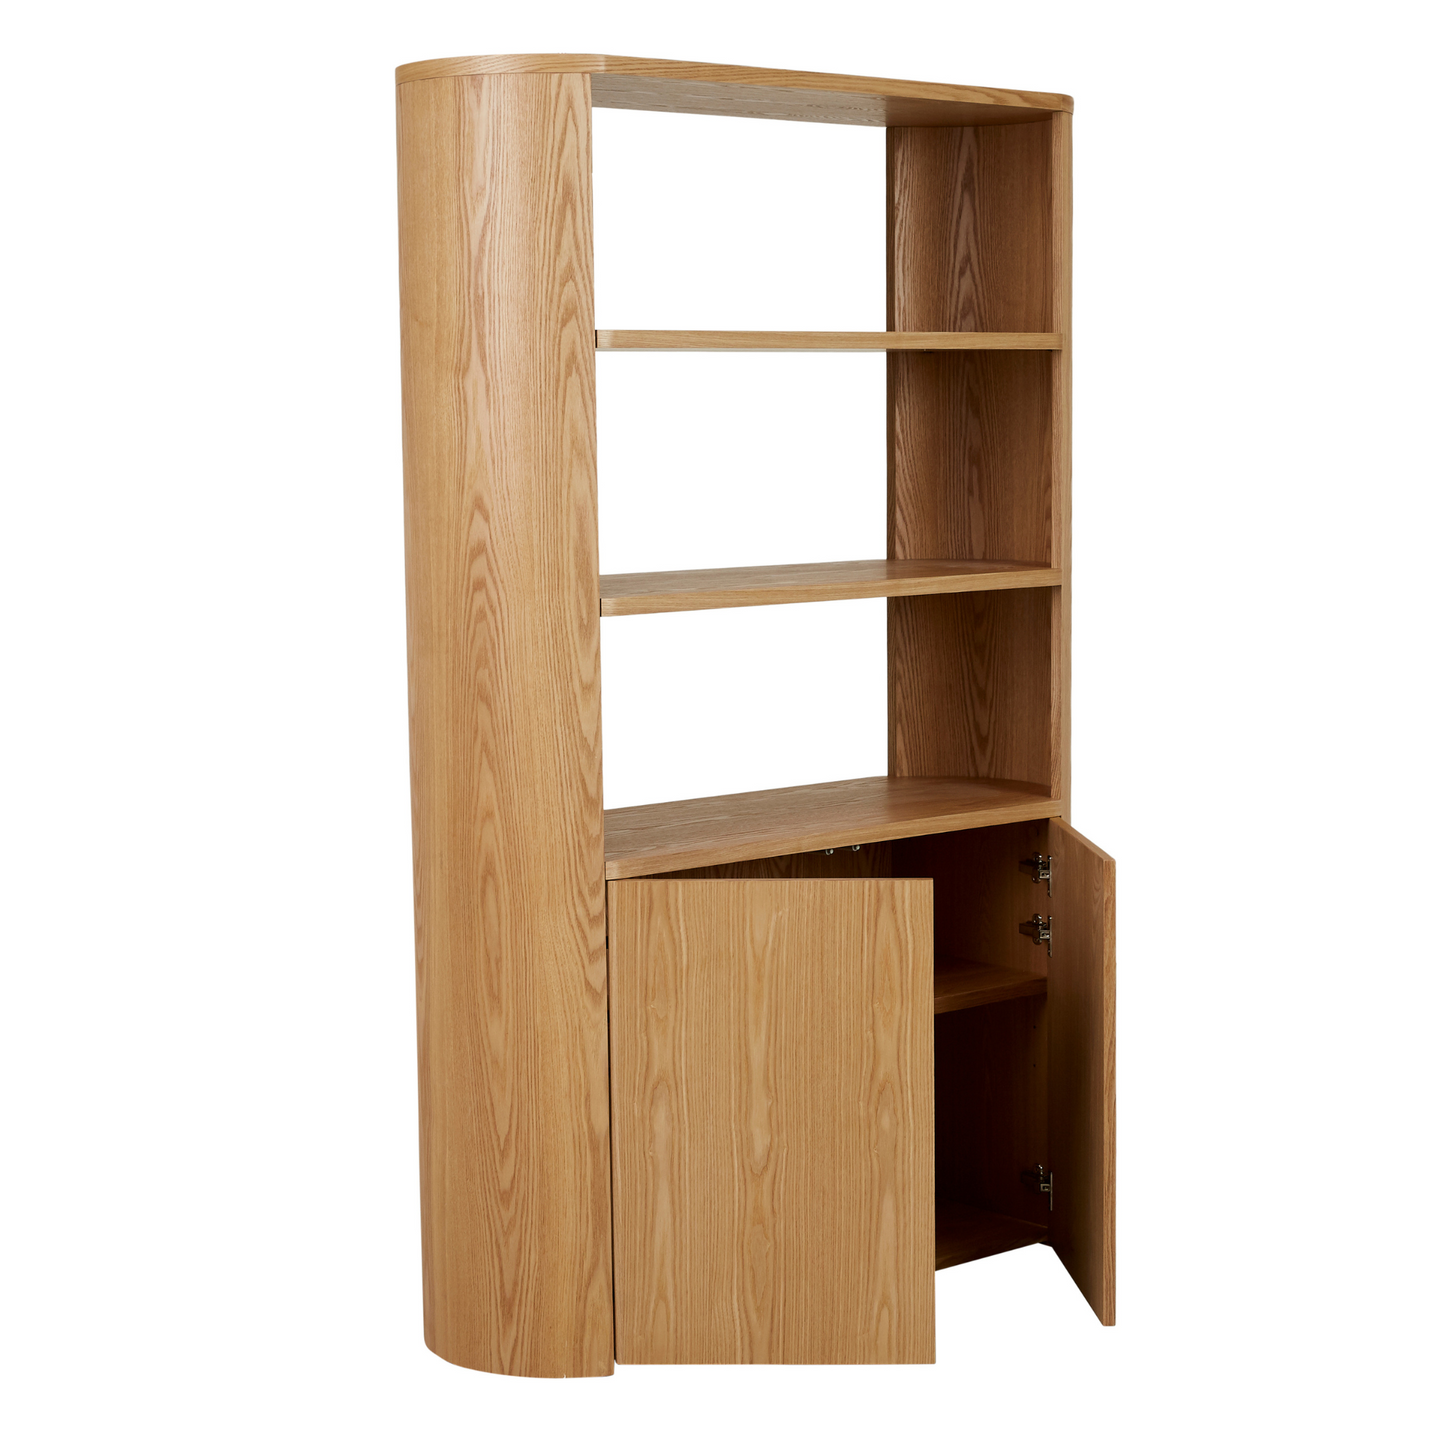 Classique Tall Oval Bookshelf by Globewest